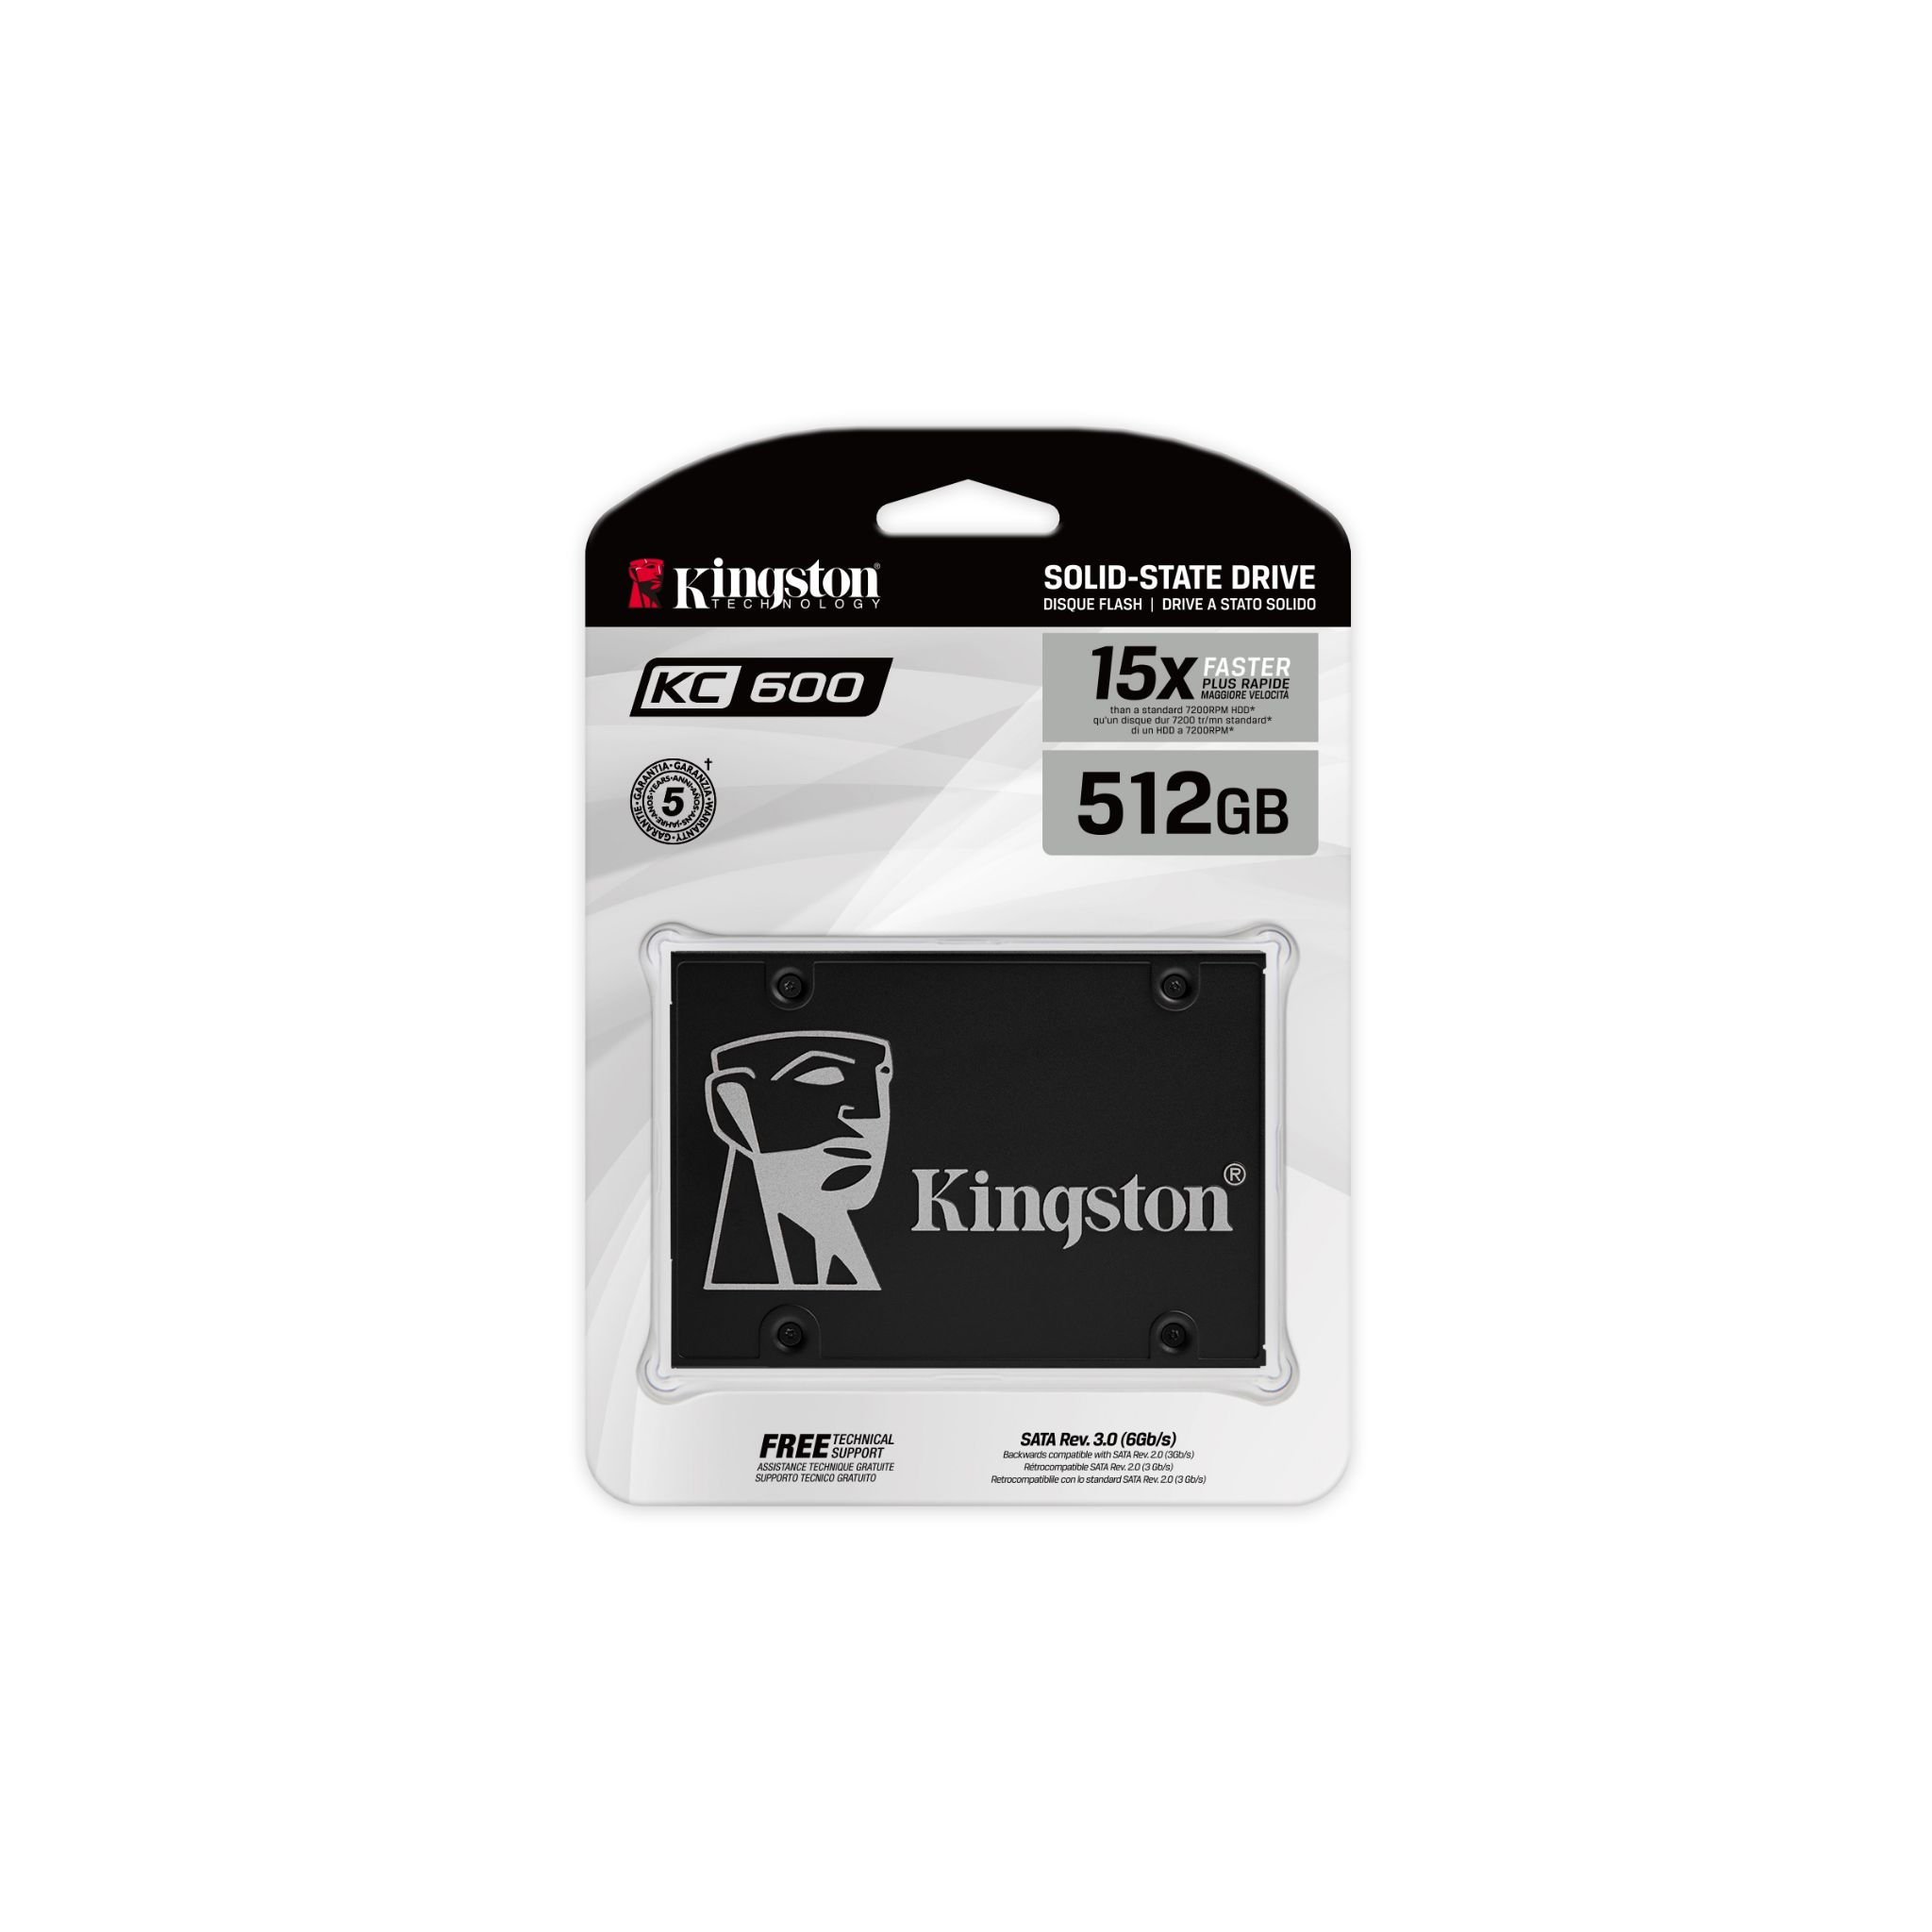 KINGSTON KC600, 1 Zoll, 2,5 intern TB, SSD